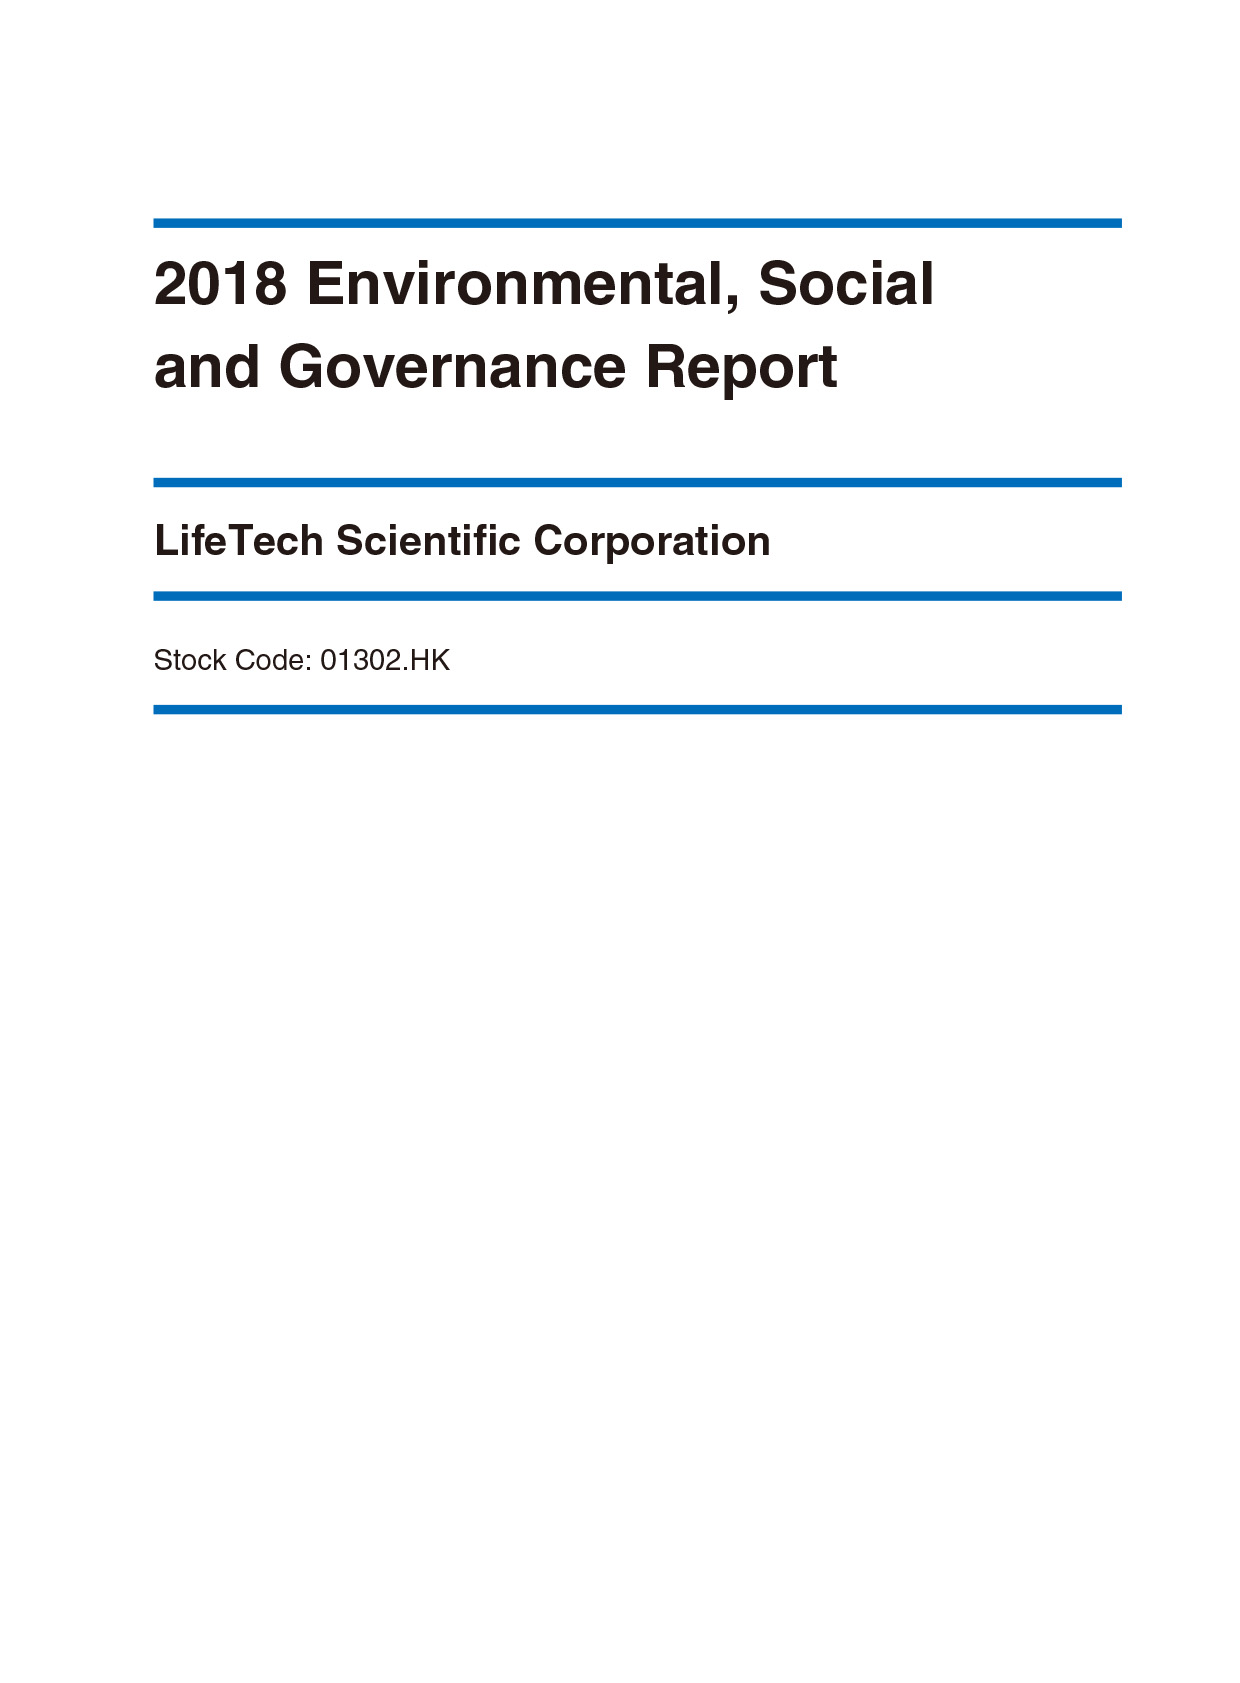 LifeTech Scientific Corporation ESG